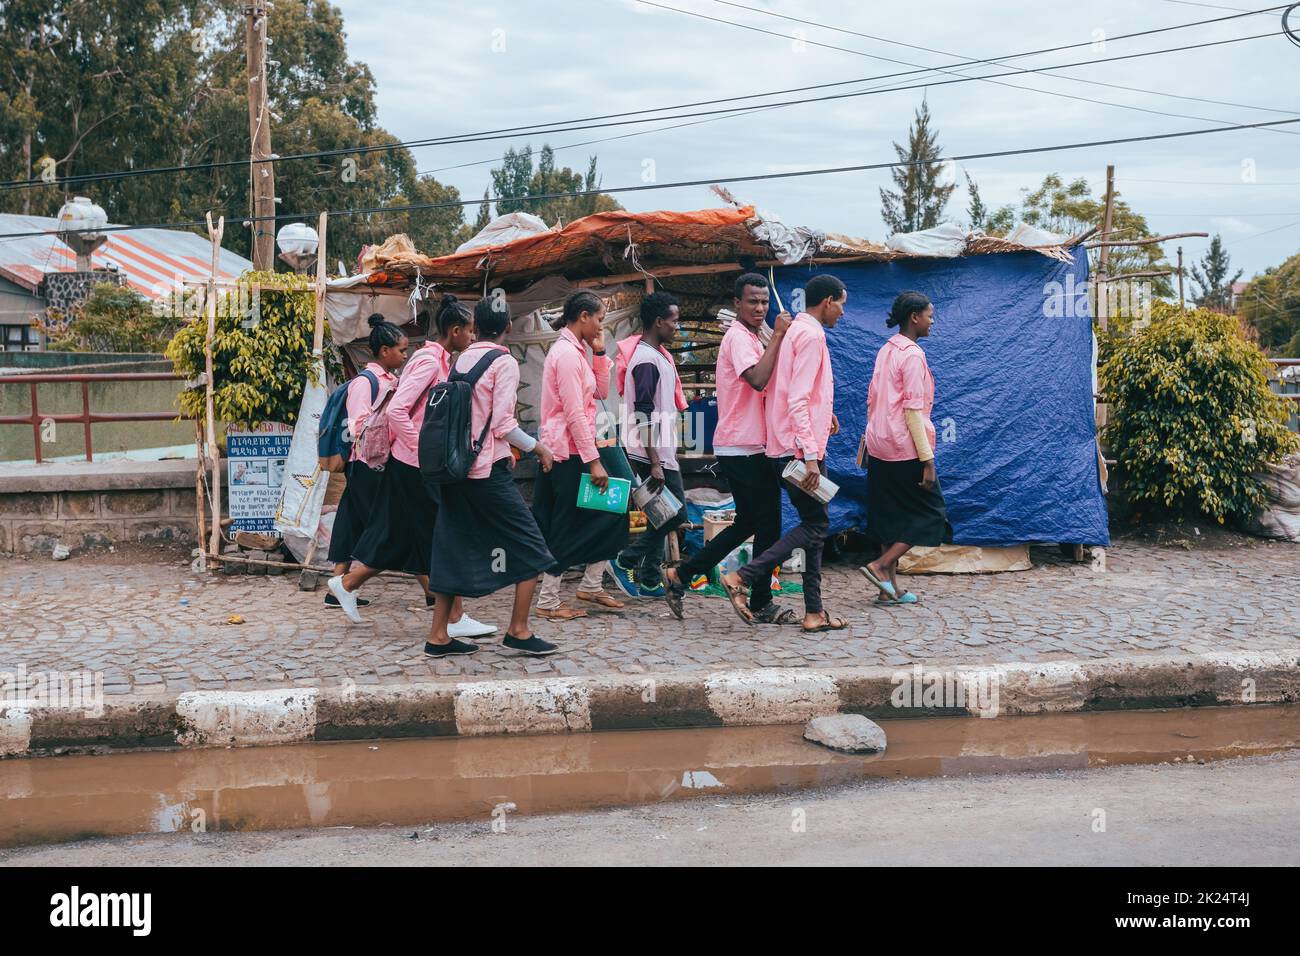 GONDAR, ETHIOPIA, APRIL 22.2019, Ethiopian students in uniform behind Fasiledes secondary school in Gondar City. Gondar, Ethiopia, April 22. 2019 Stock Photo